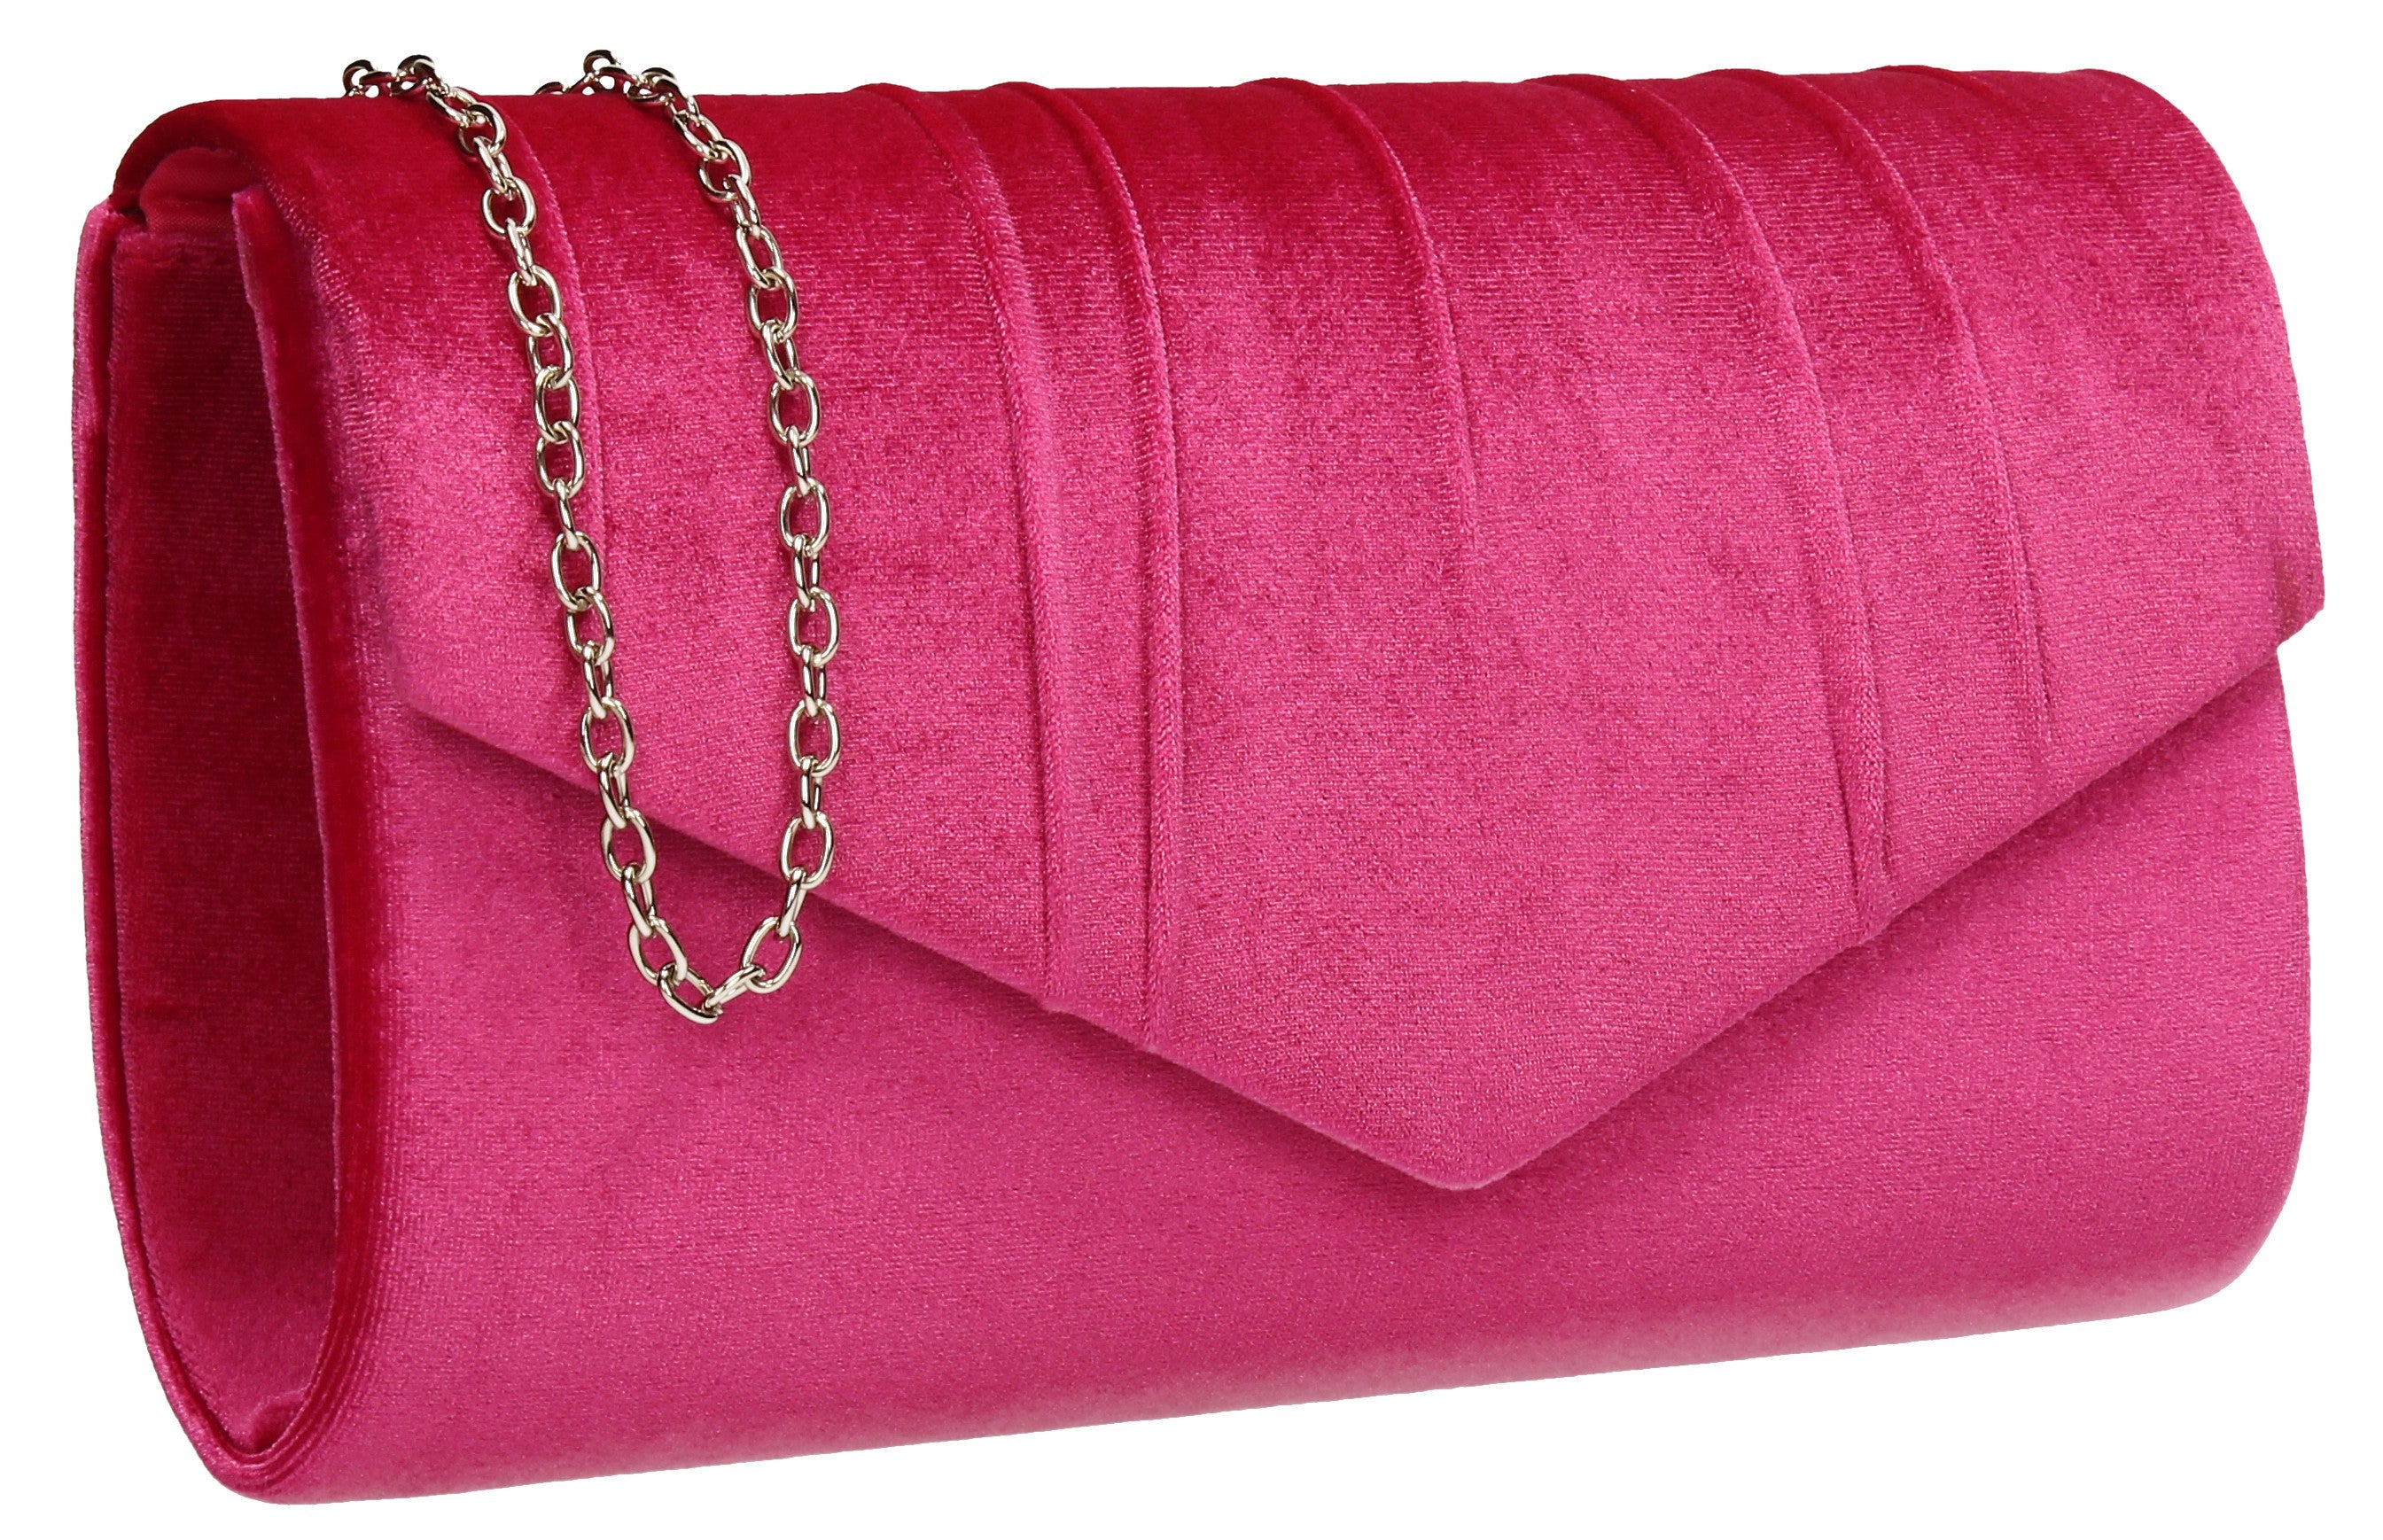 Rhinestone Crystal Clutch Evening Bags | Fgg Boutique Evening Clutch Purses  - Women - Aliexpress